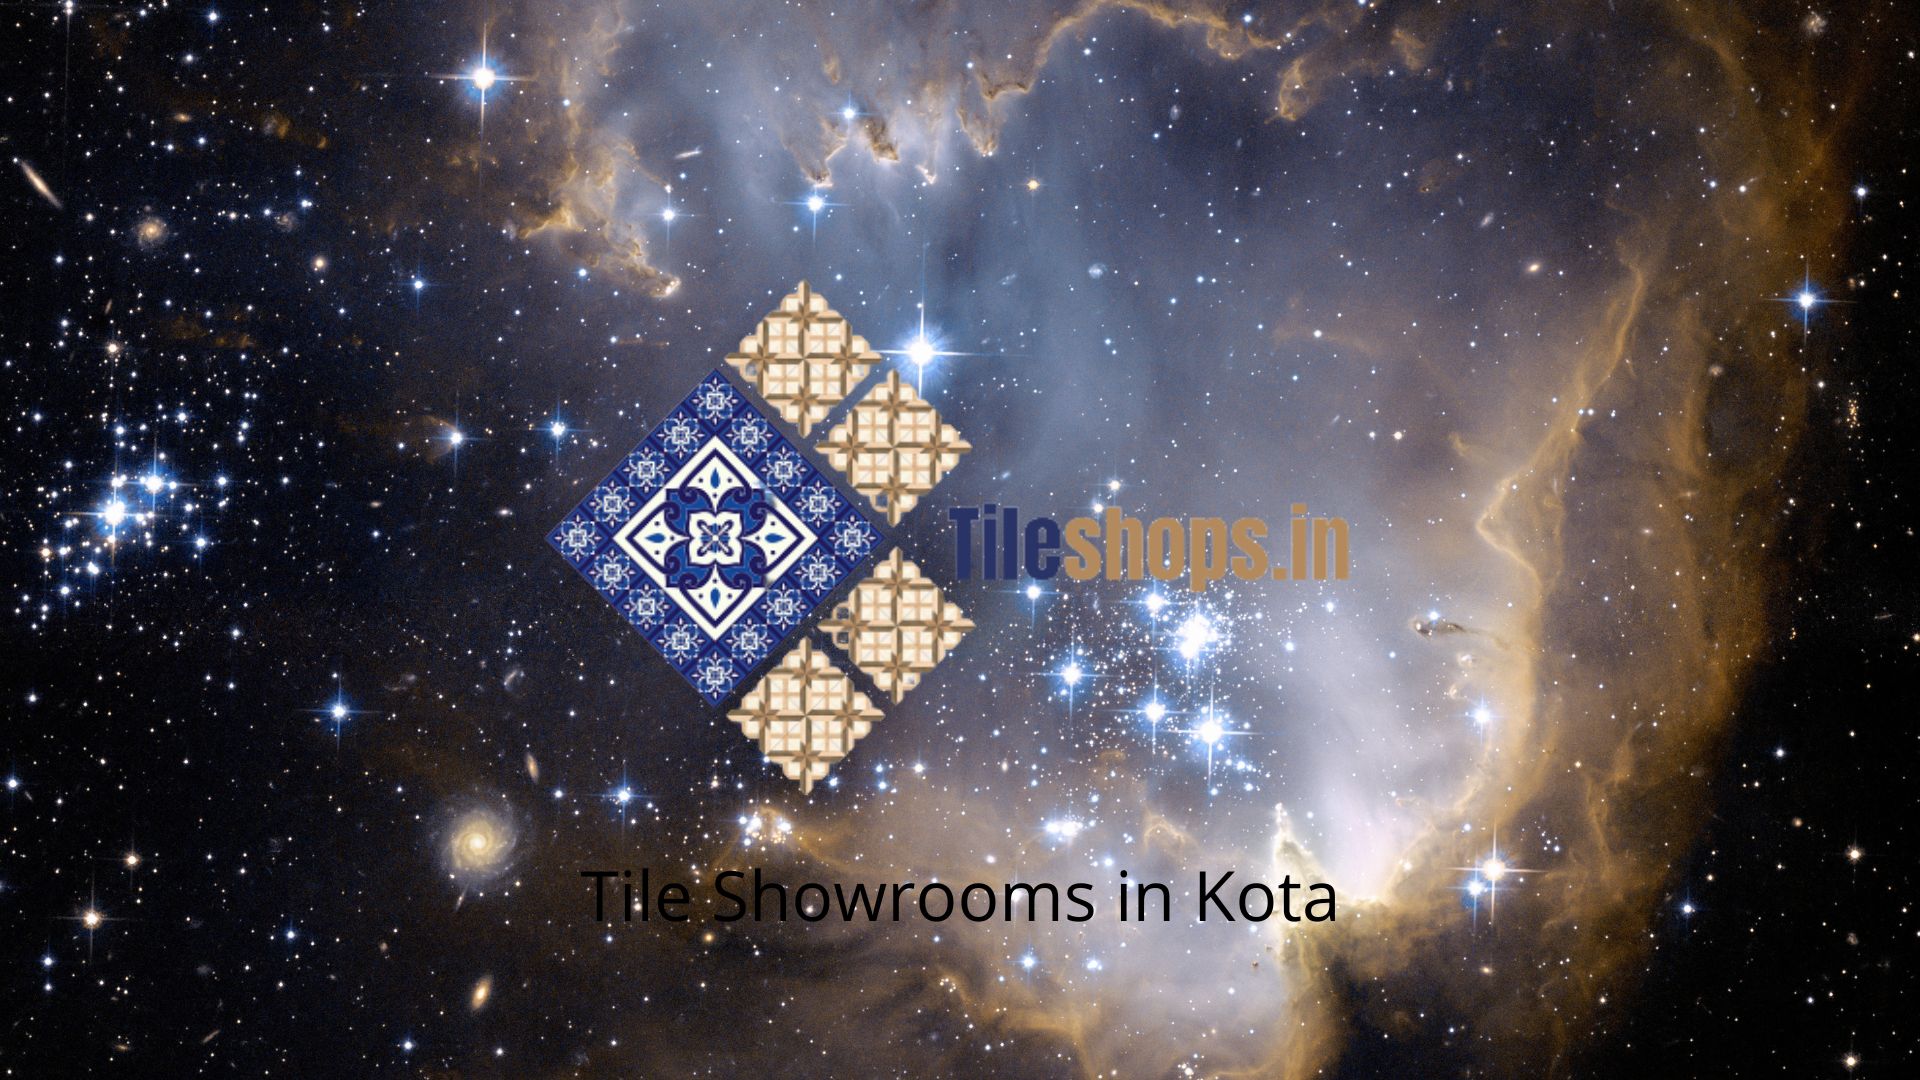 Tile Showrooms in Kota